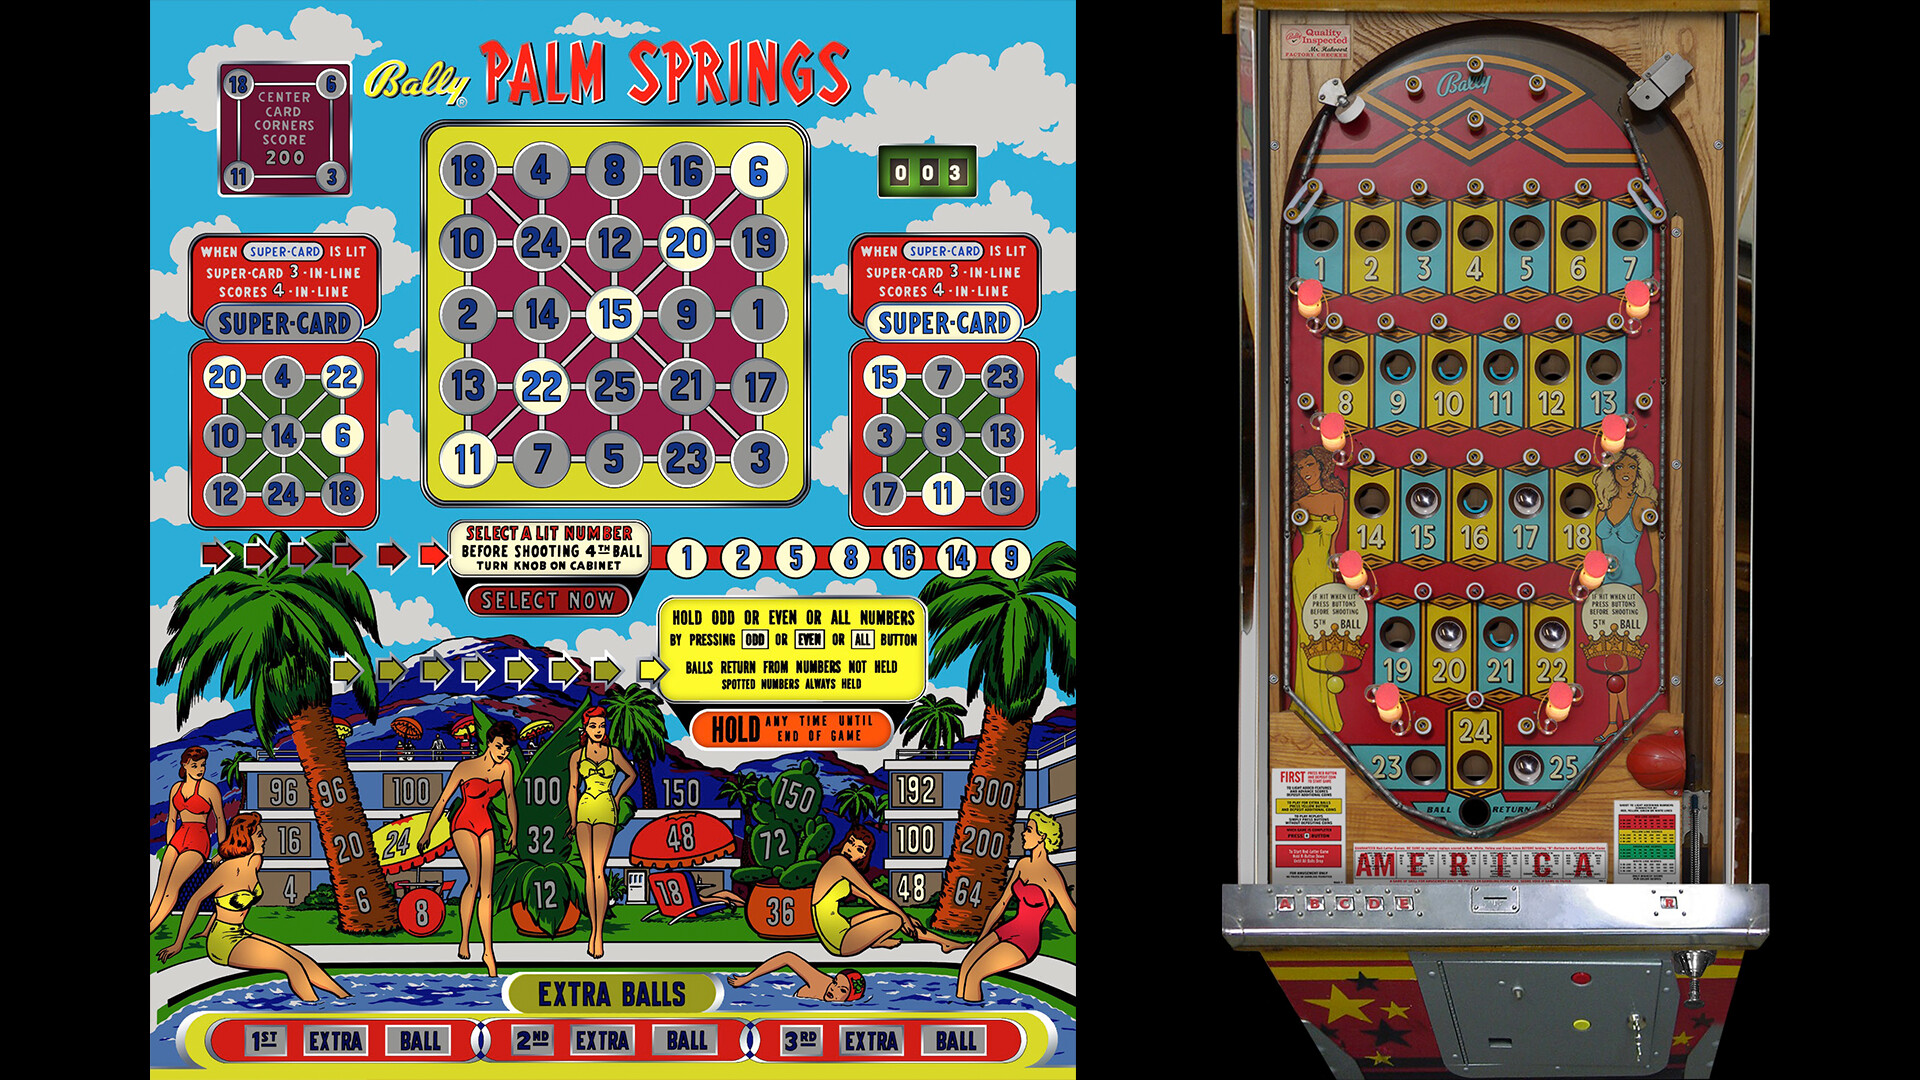 Bingo Pinball Gameroom - Bally Palm Springs Featured Screenshot #1